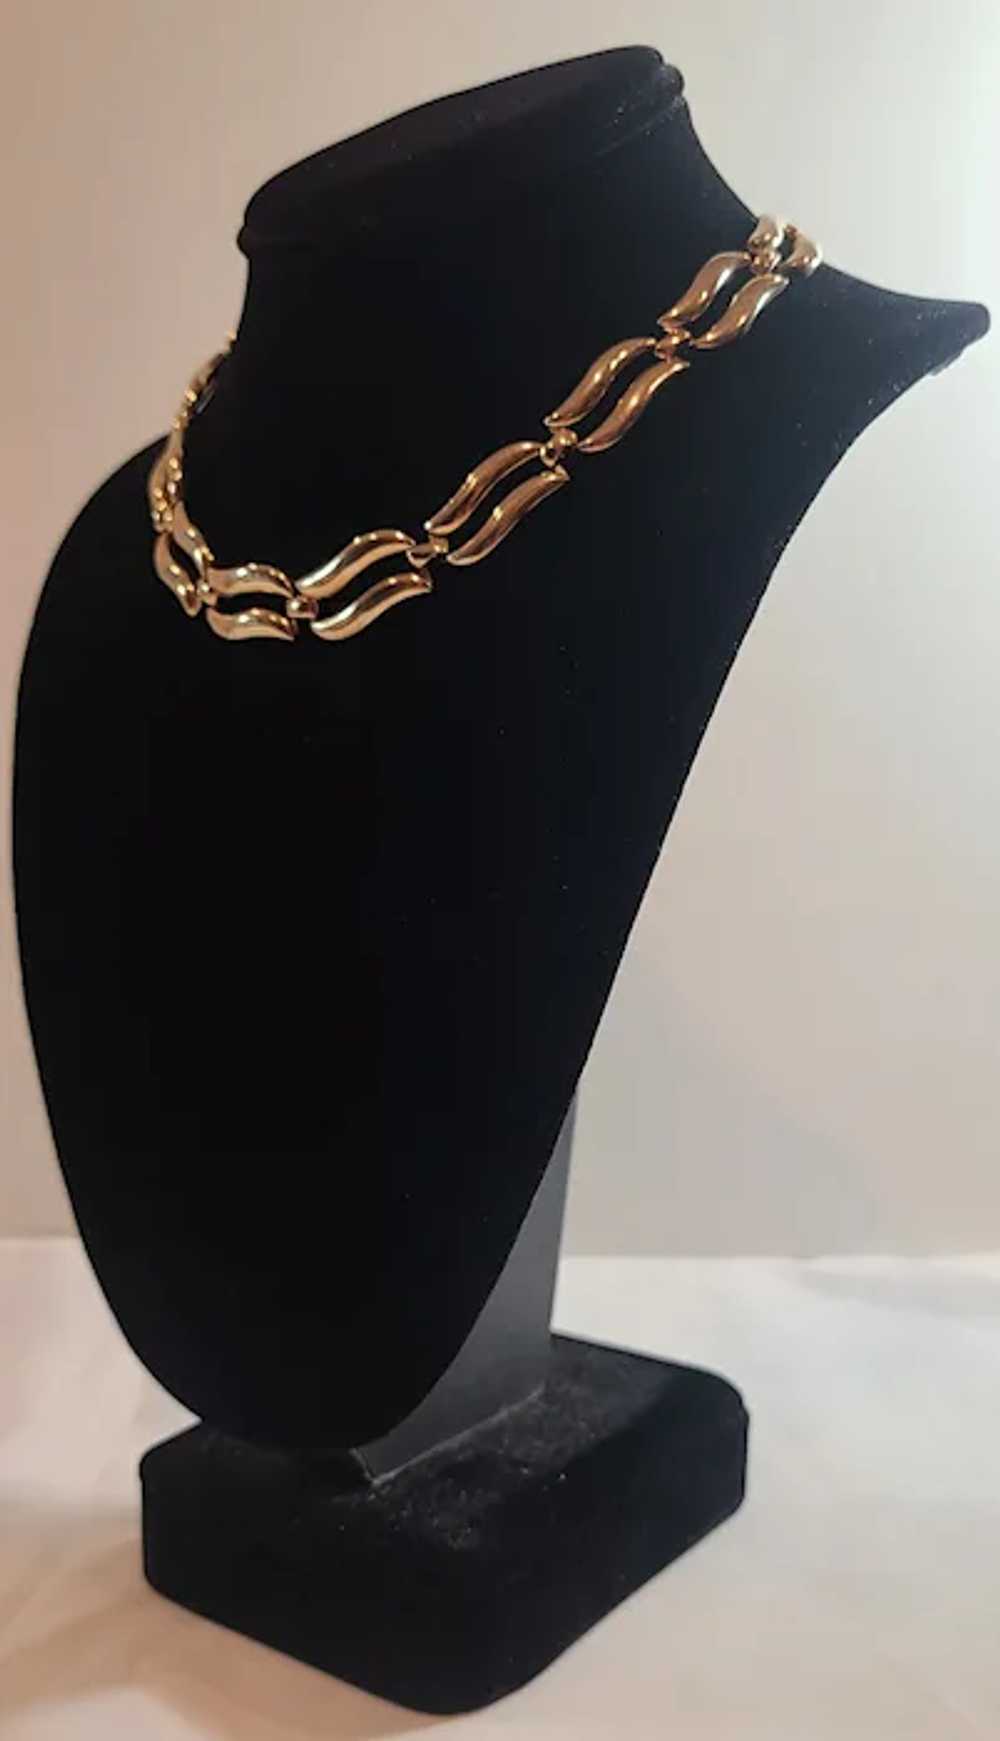 Vintage Monet Gold Tone Link Choker Necklace - image 9